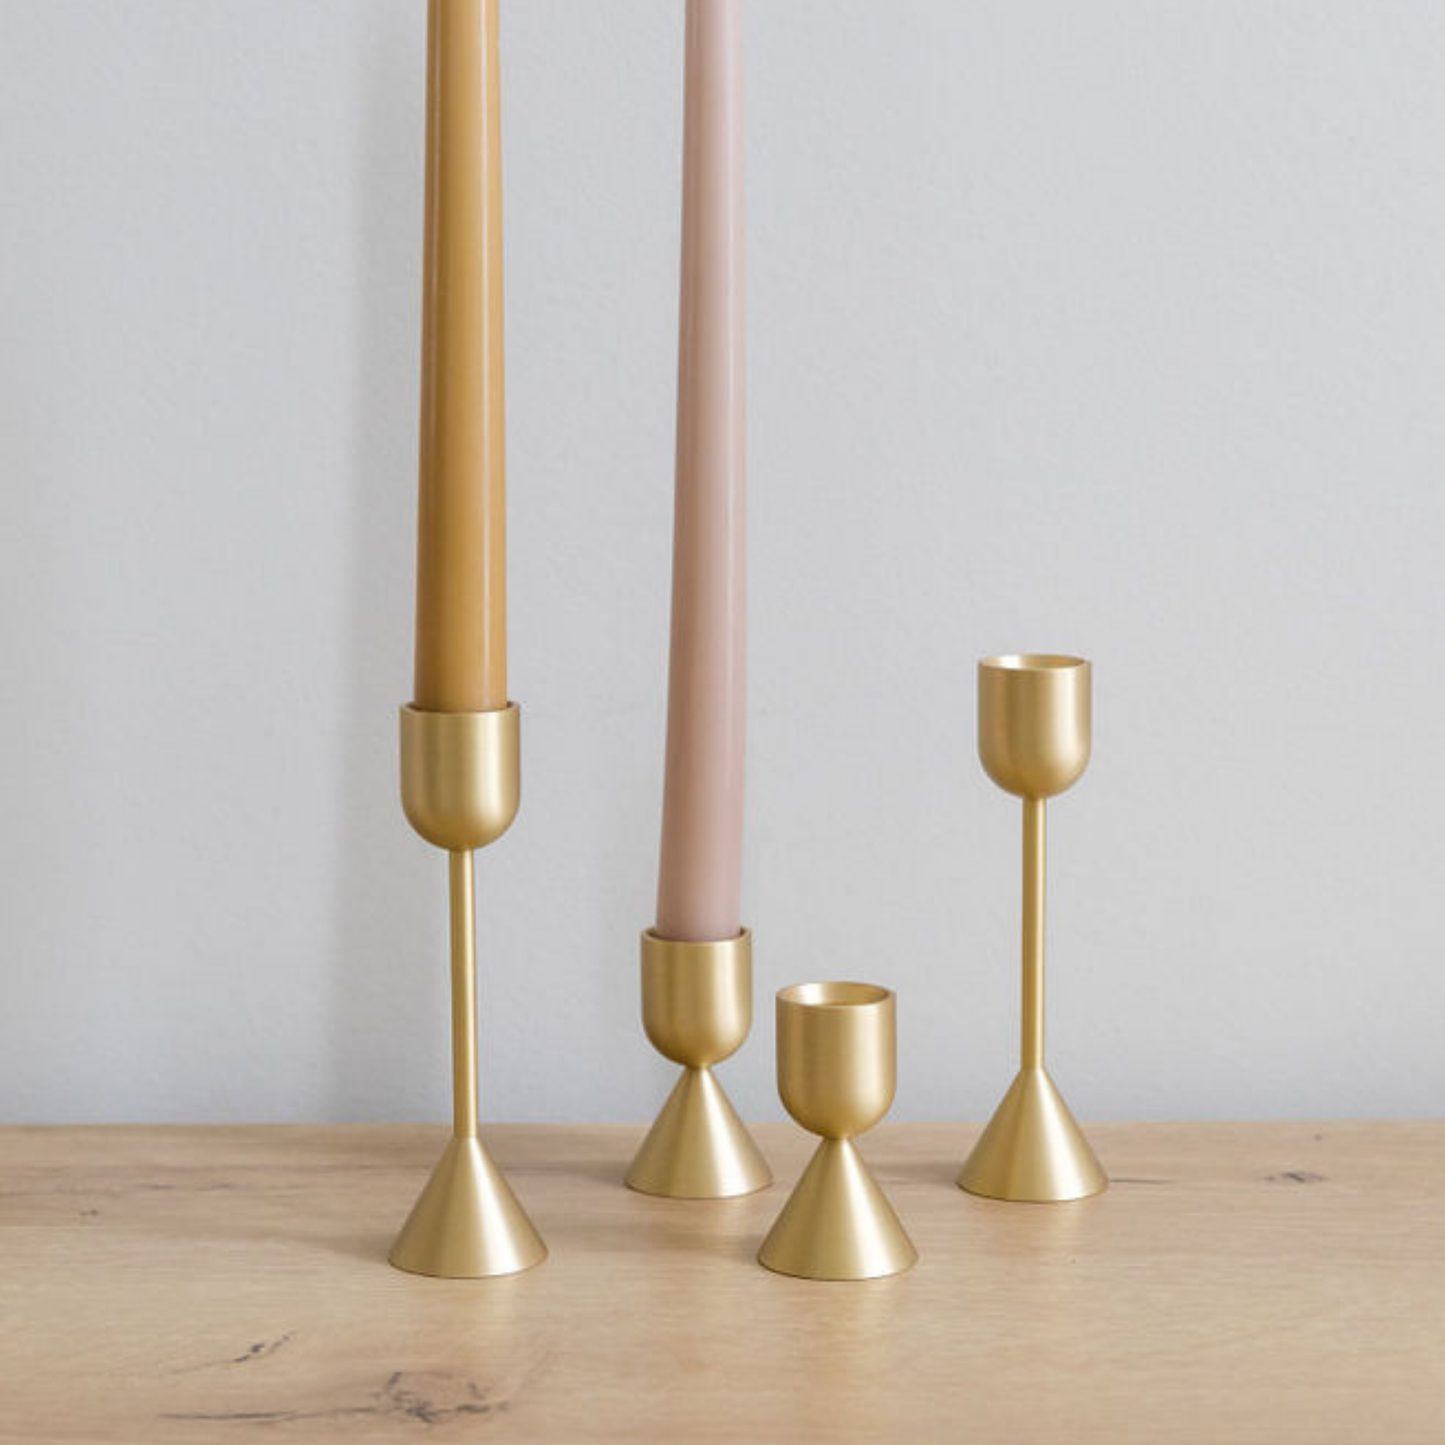 Minimalist and sleek brass taper candlestick holder for modern decor